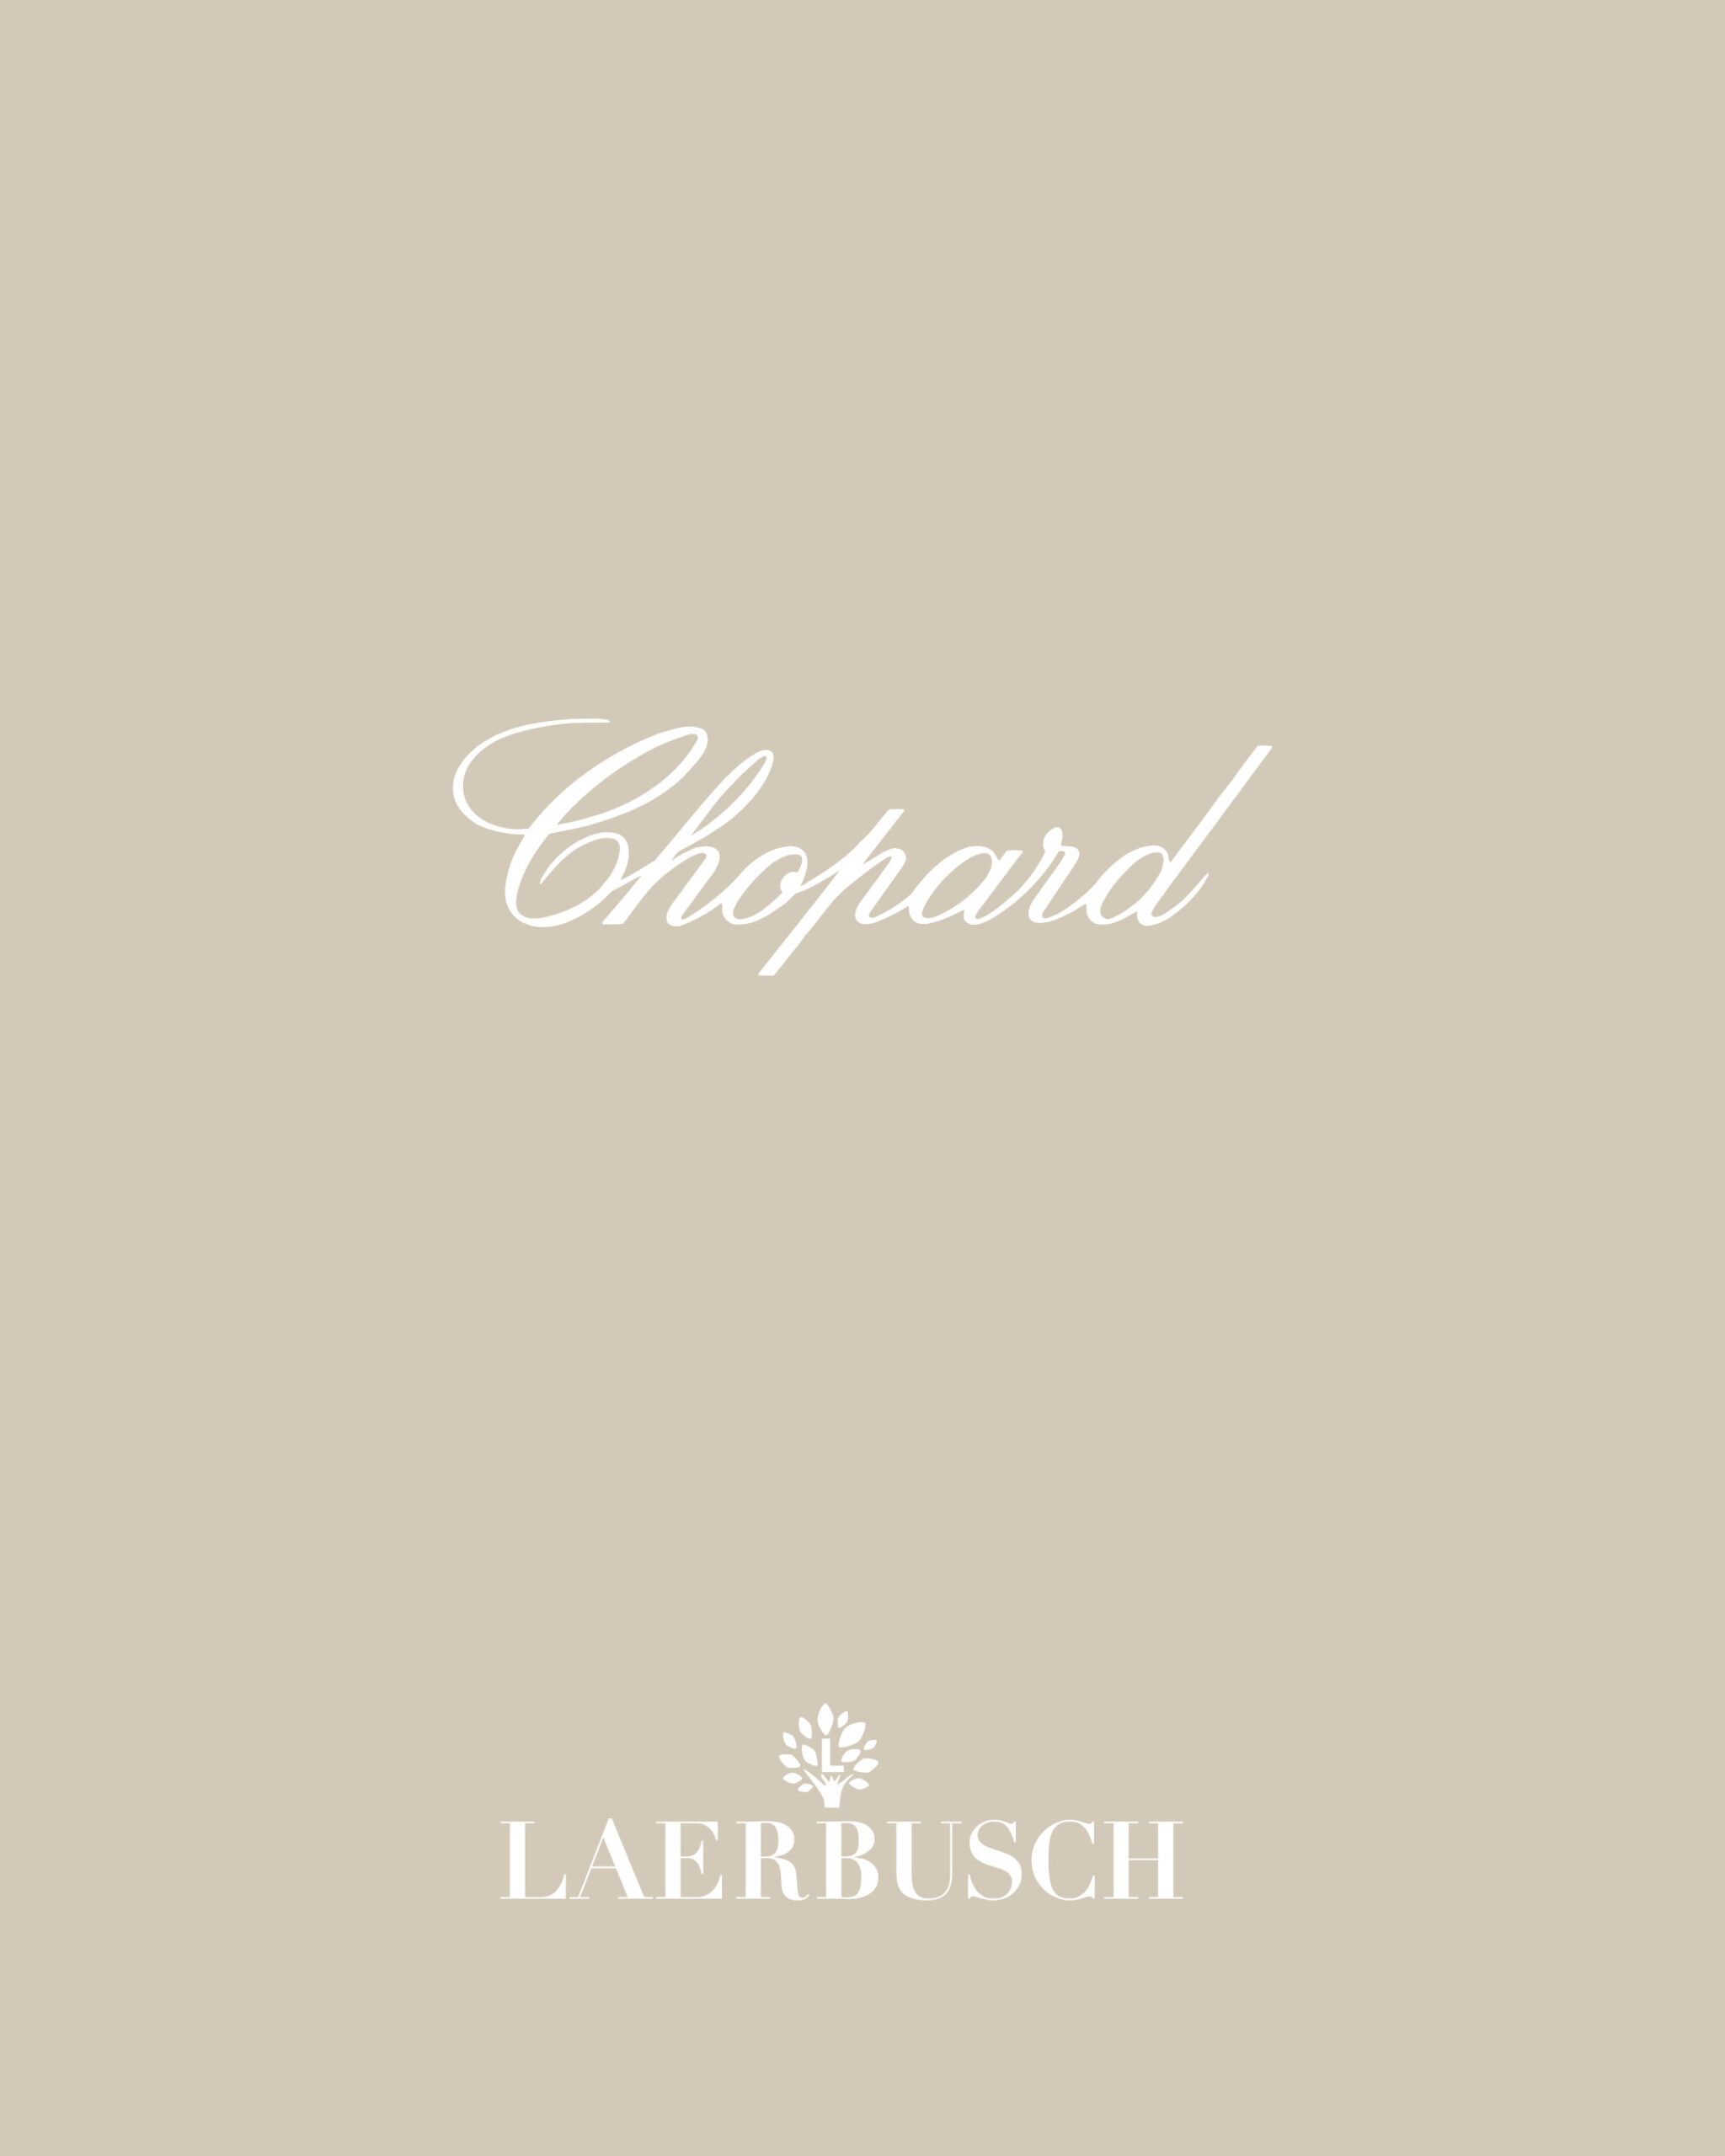 Chopard bei Juwelier Laerbusch in Mülheim an der Ruhr